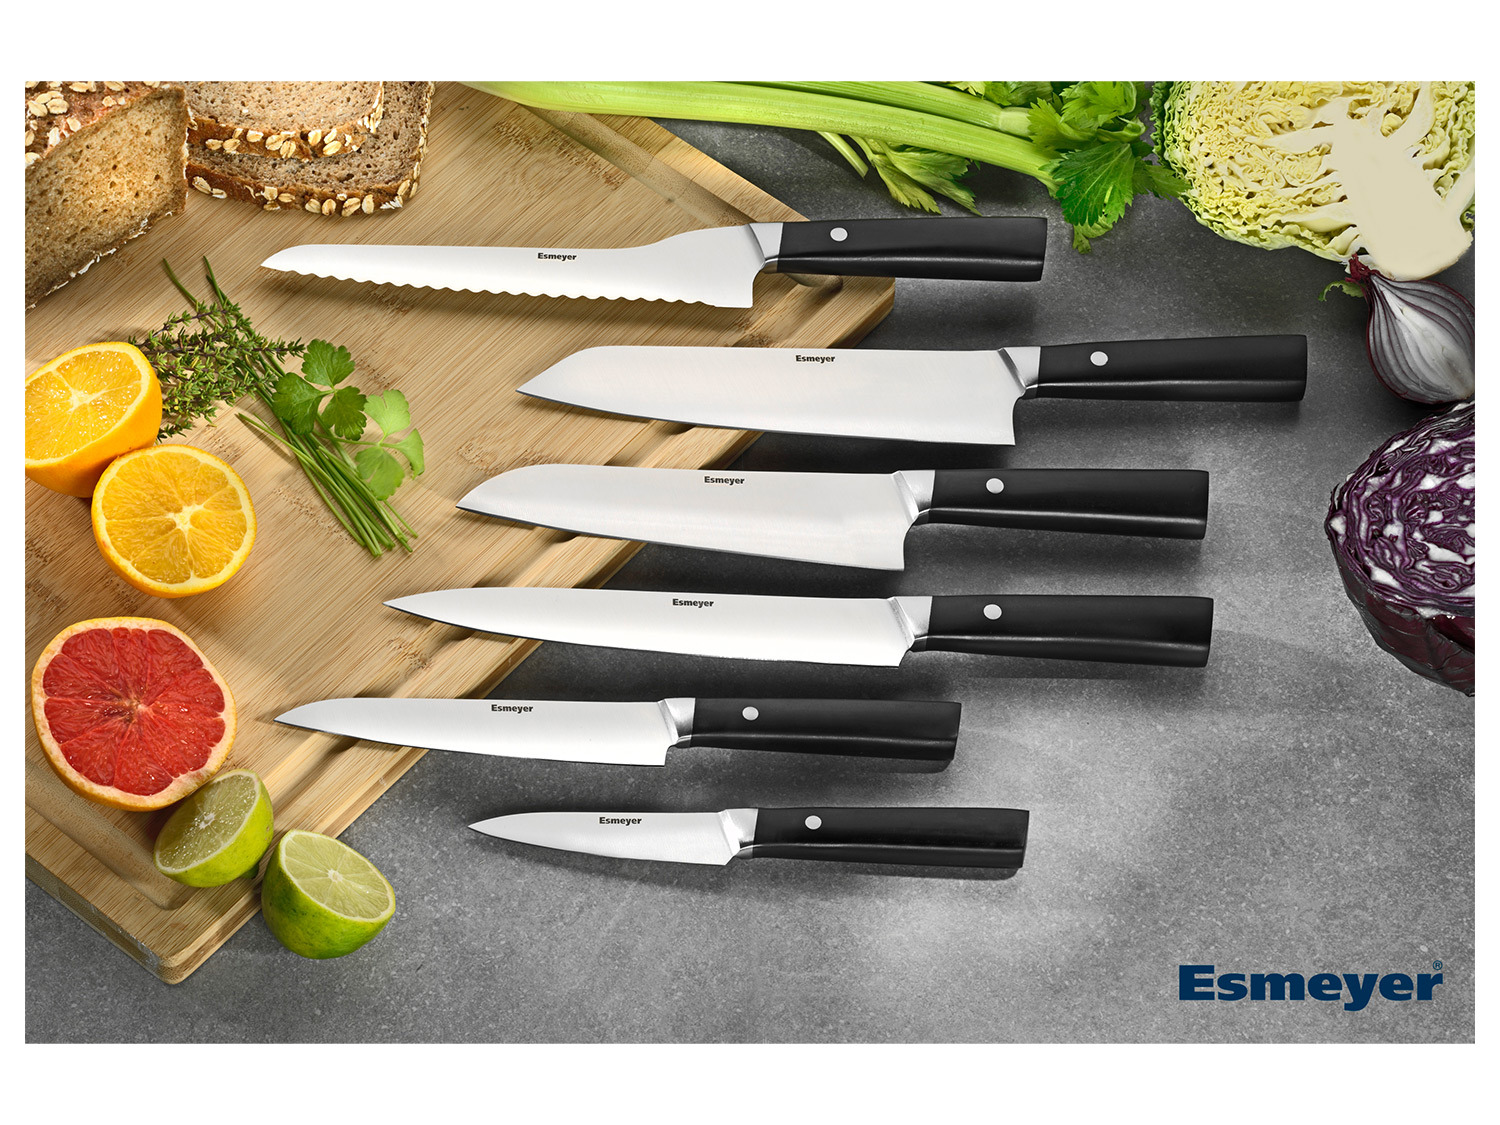 Esmeyer Asia Messerset 6-teilig aus | LIDL Edelstahl